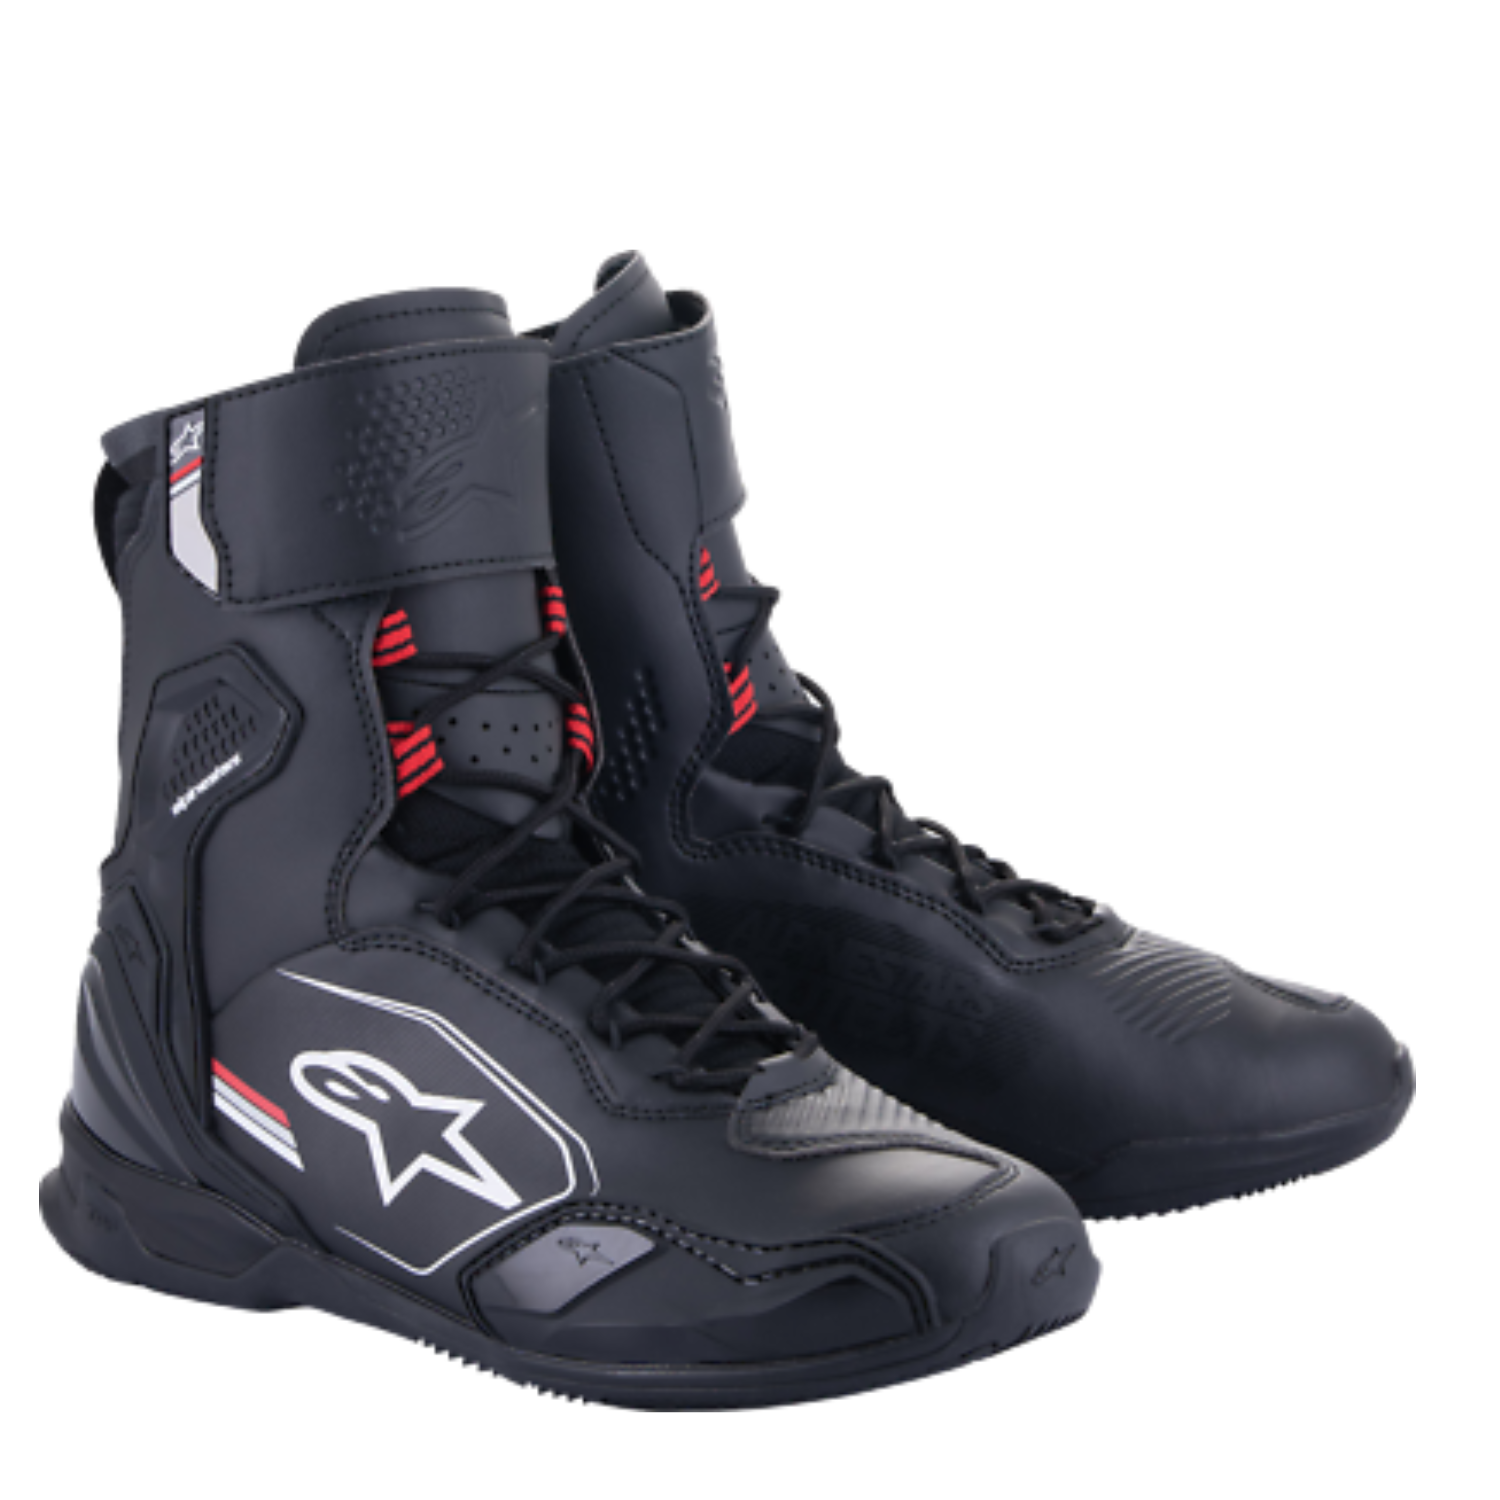 Image of Alpinestars Superfaster Shoes Black Gray Bright Red Größe US 13